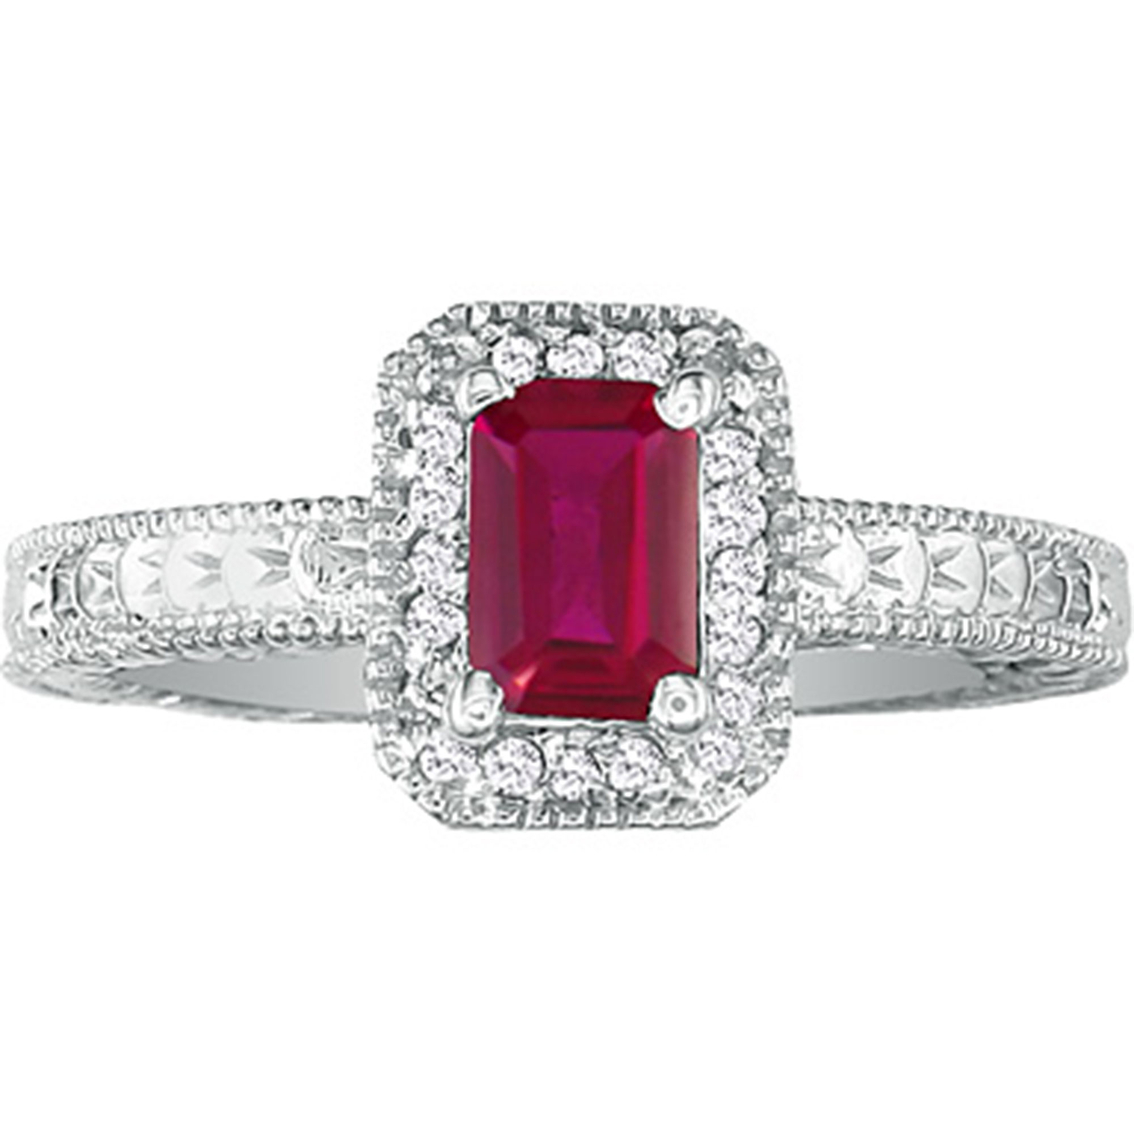 10k Yellow Gold Ruby And Diamond Ring | Gemstone Rings | Jewelry ...